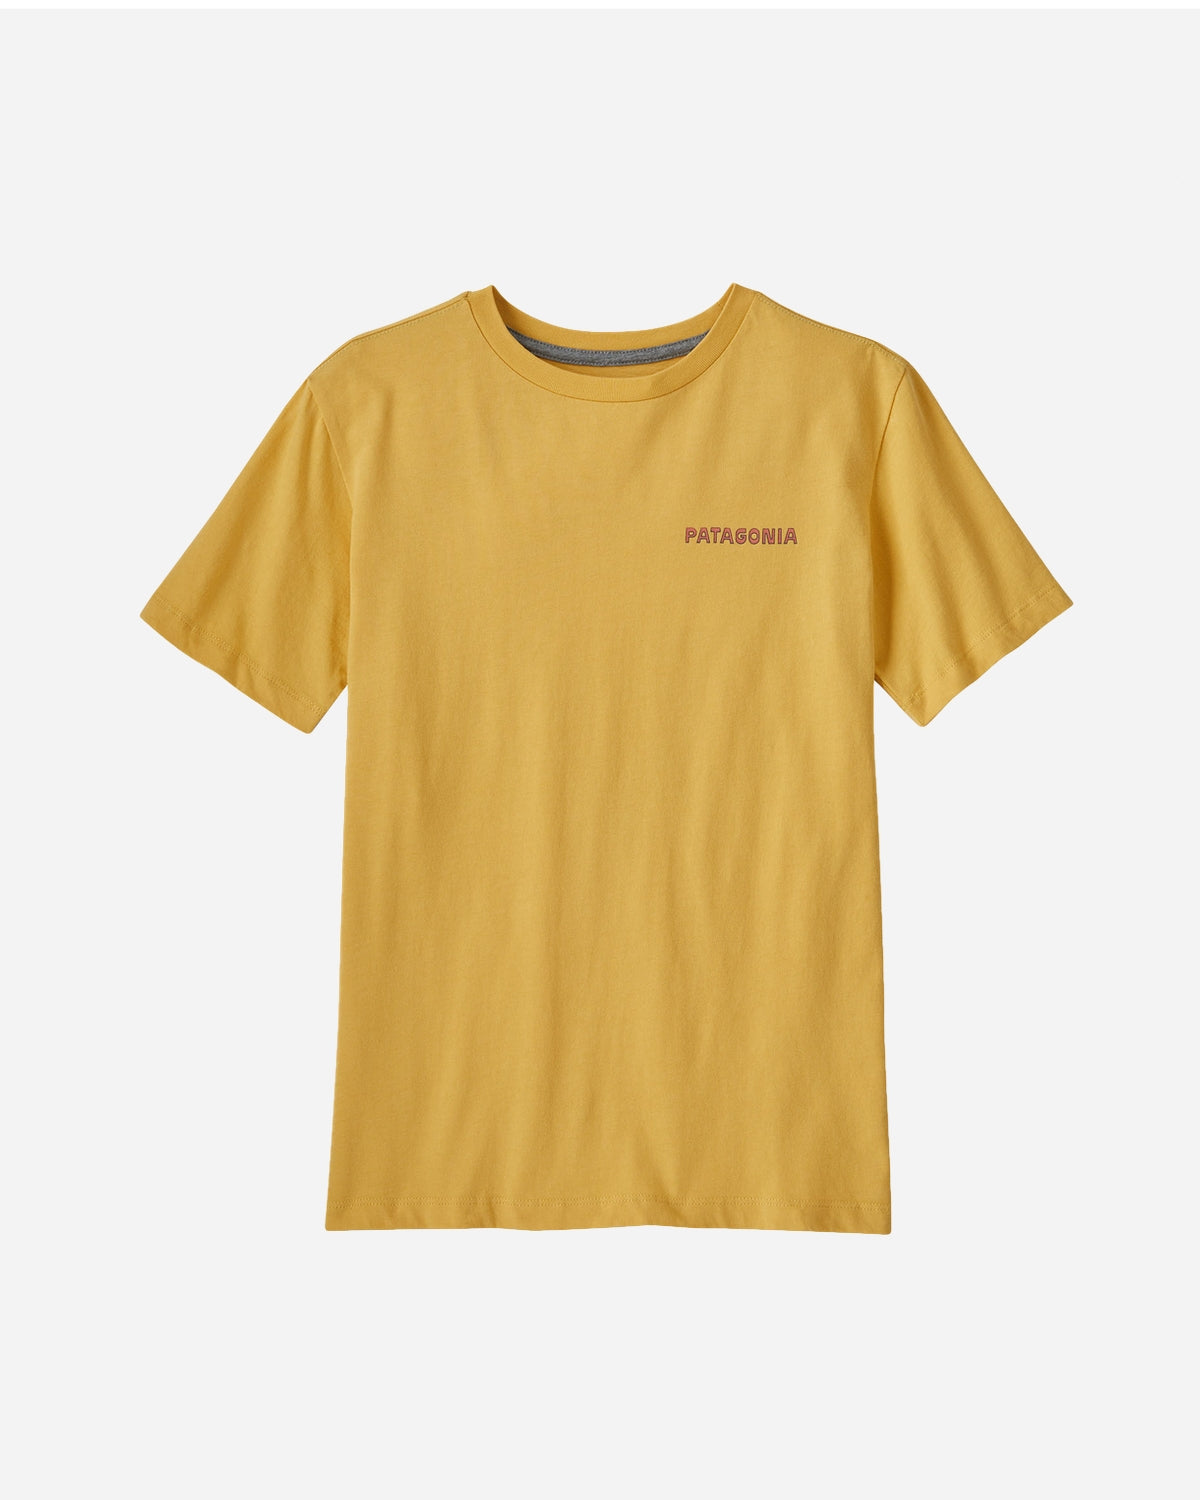 Teens Regenerative Graphic T-Shirt - Summit Swell/Surfboard Yellow - Patagonia - Munkstore.dk